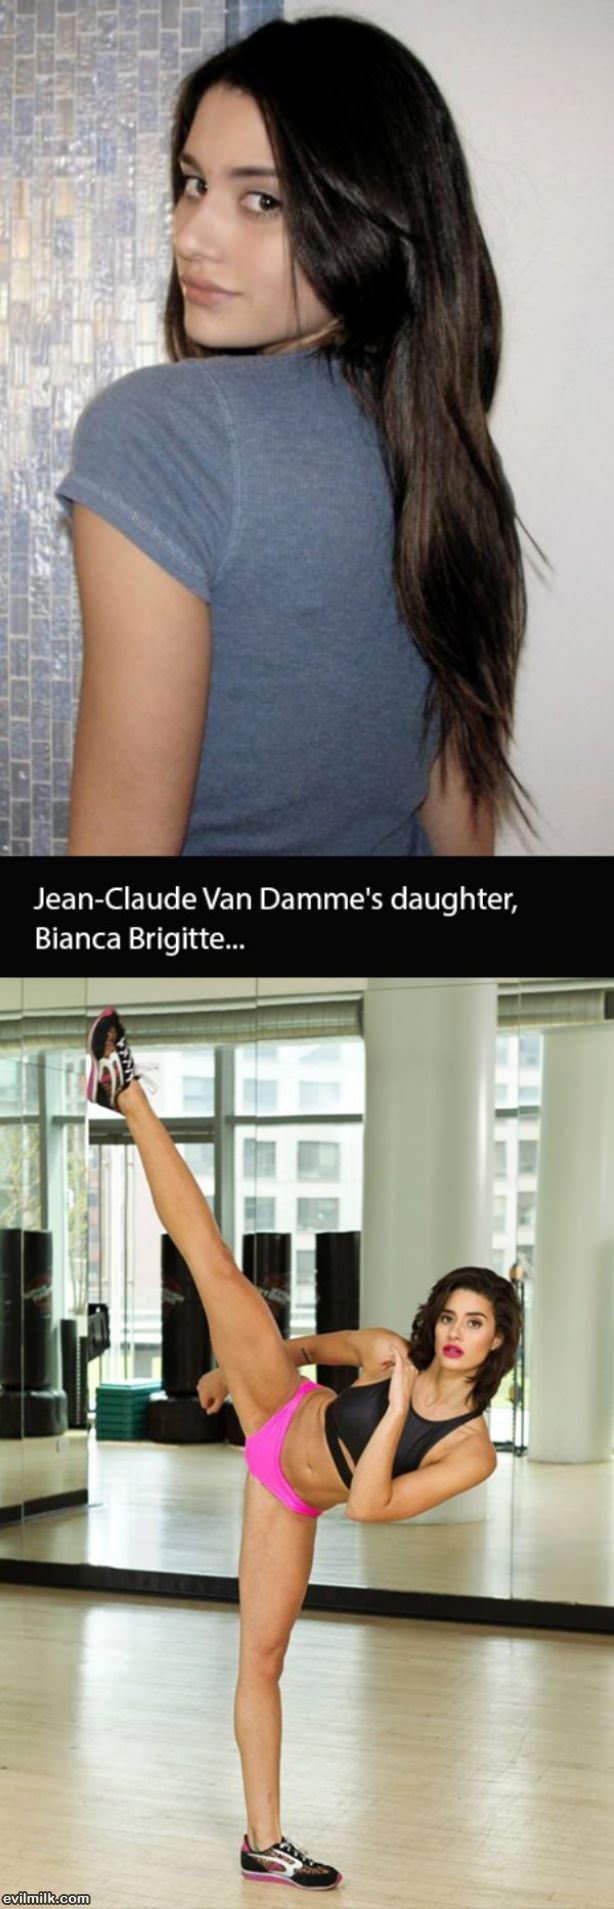 Bianca Brigitte